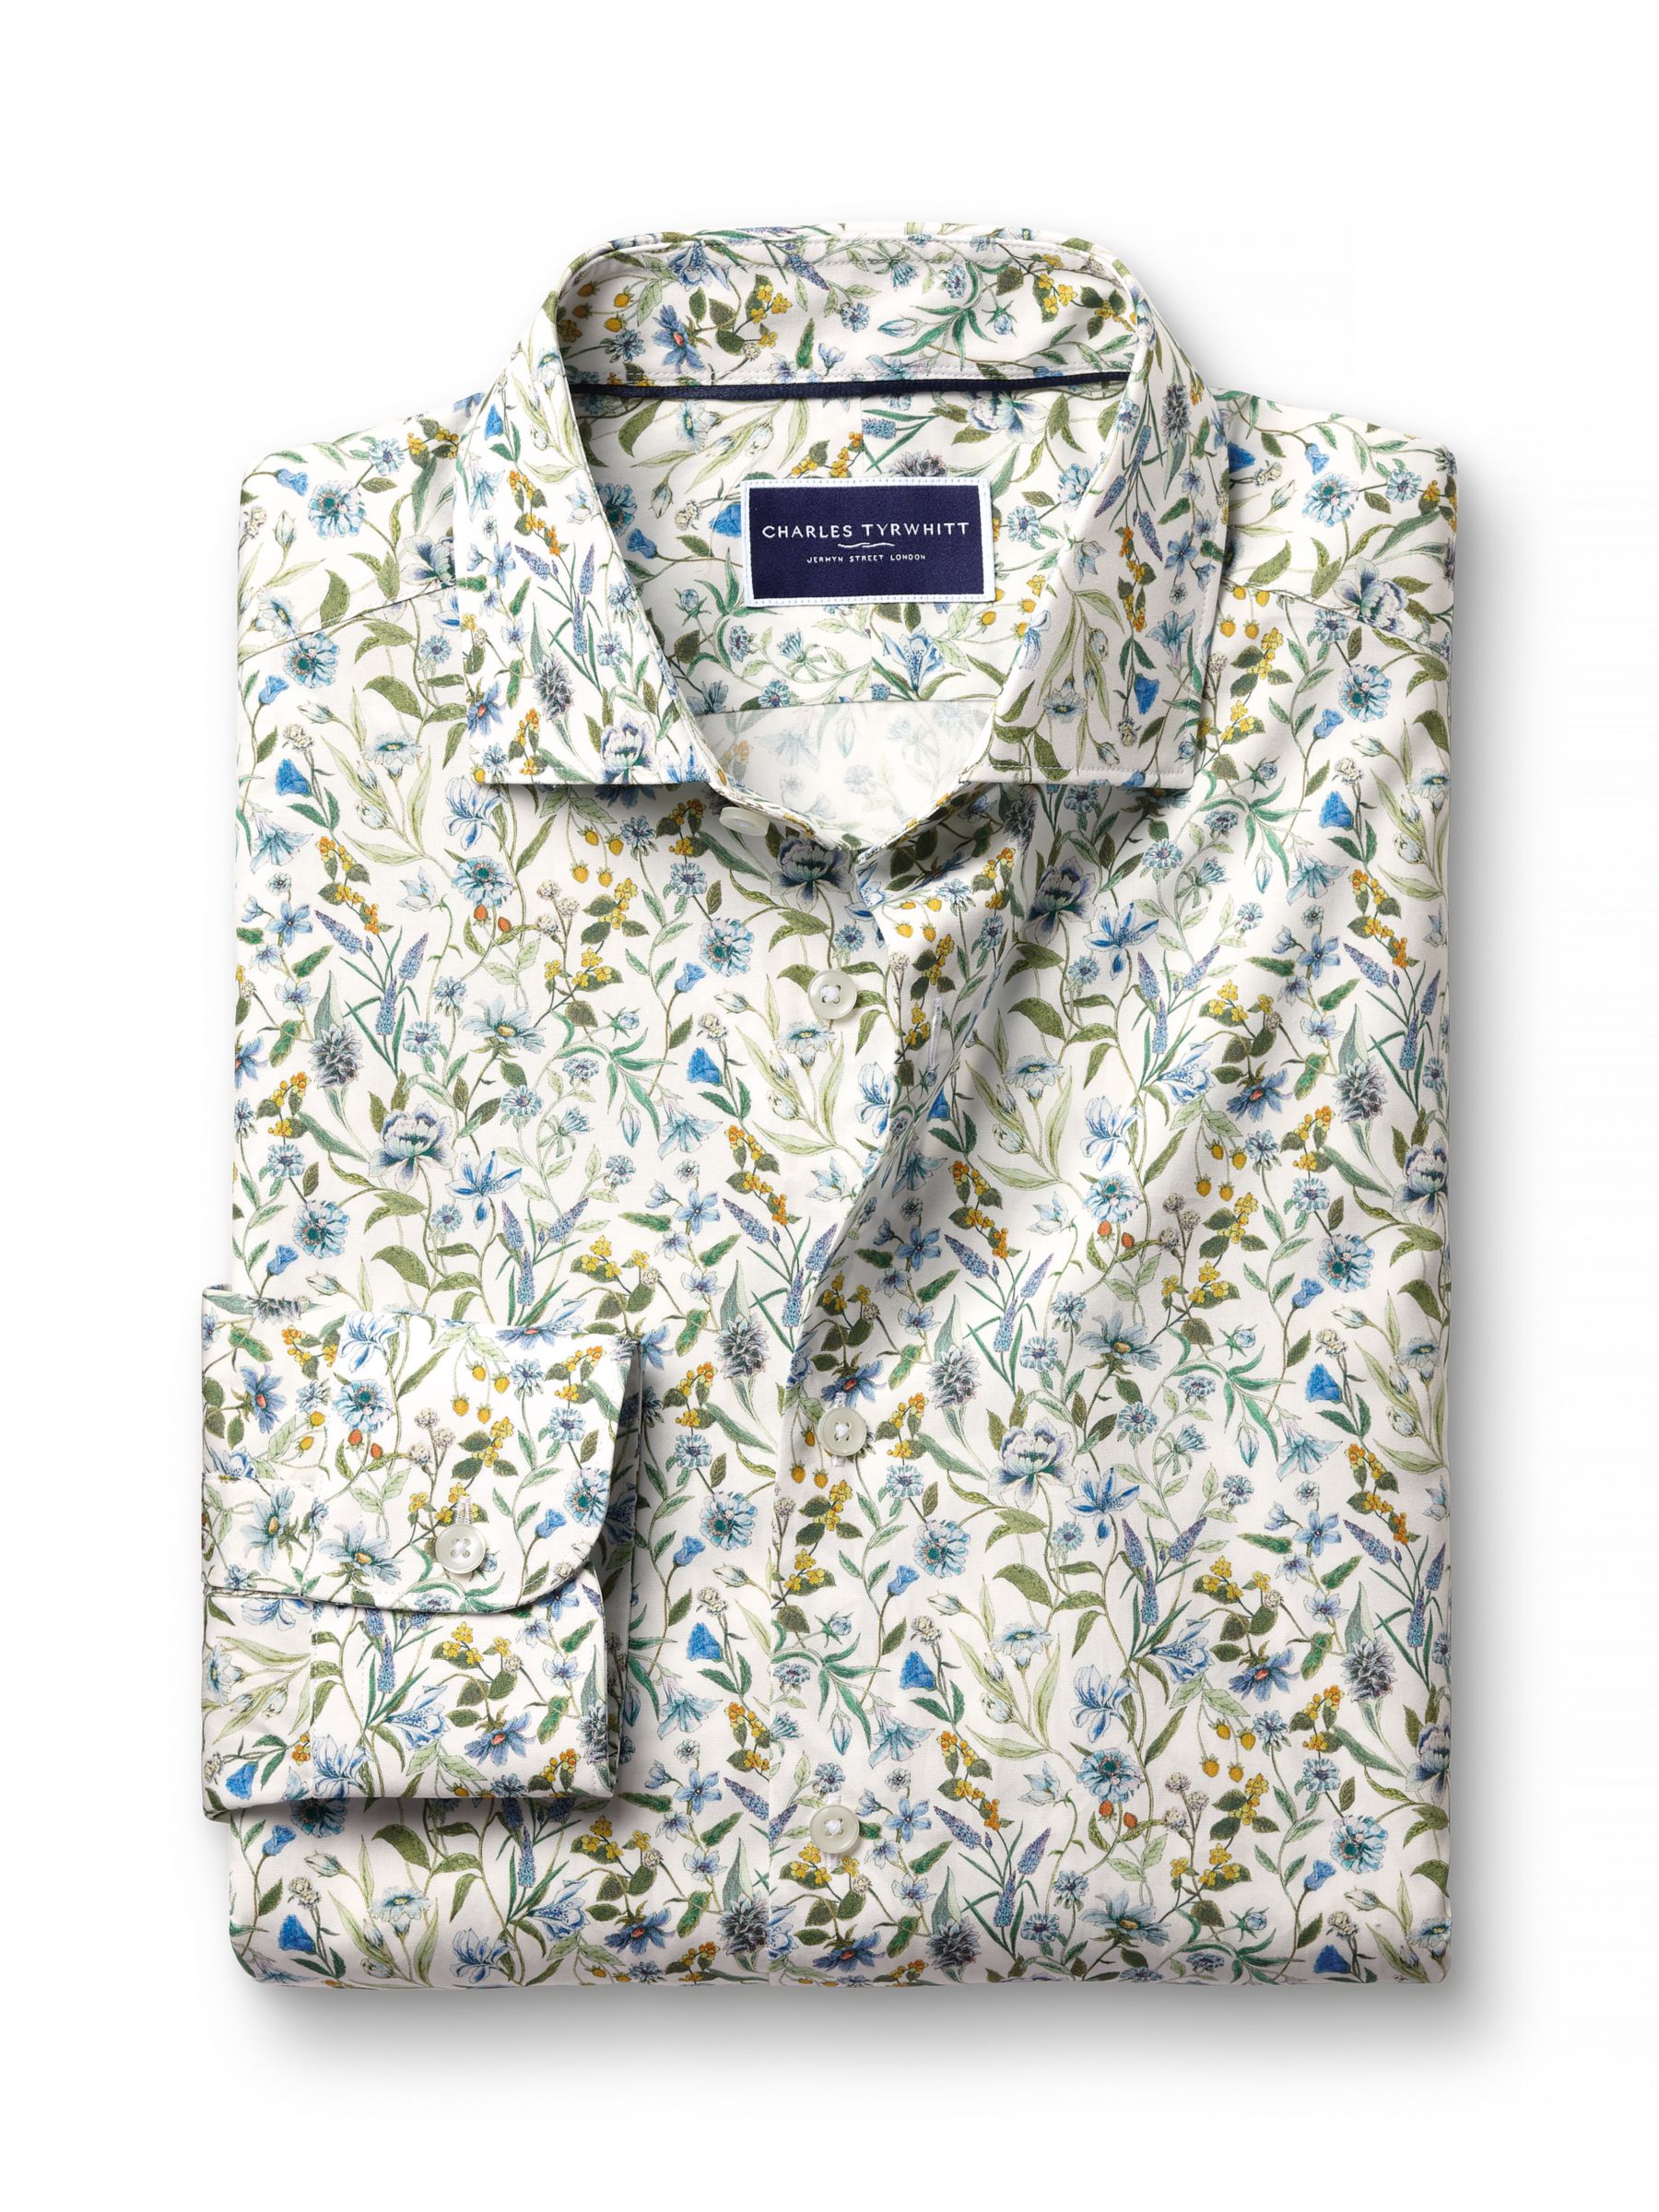 Charles Tyrwhitt Classic Fit Floral Liberty Print Shirt, Multi, M